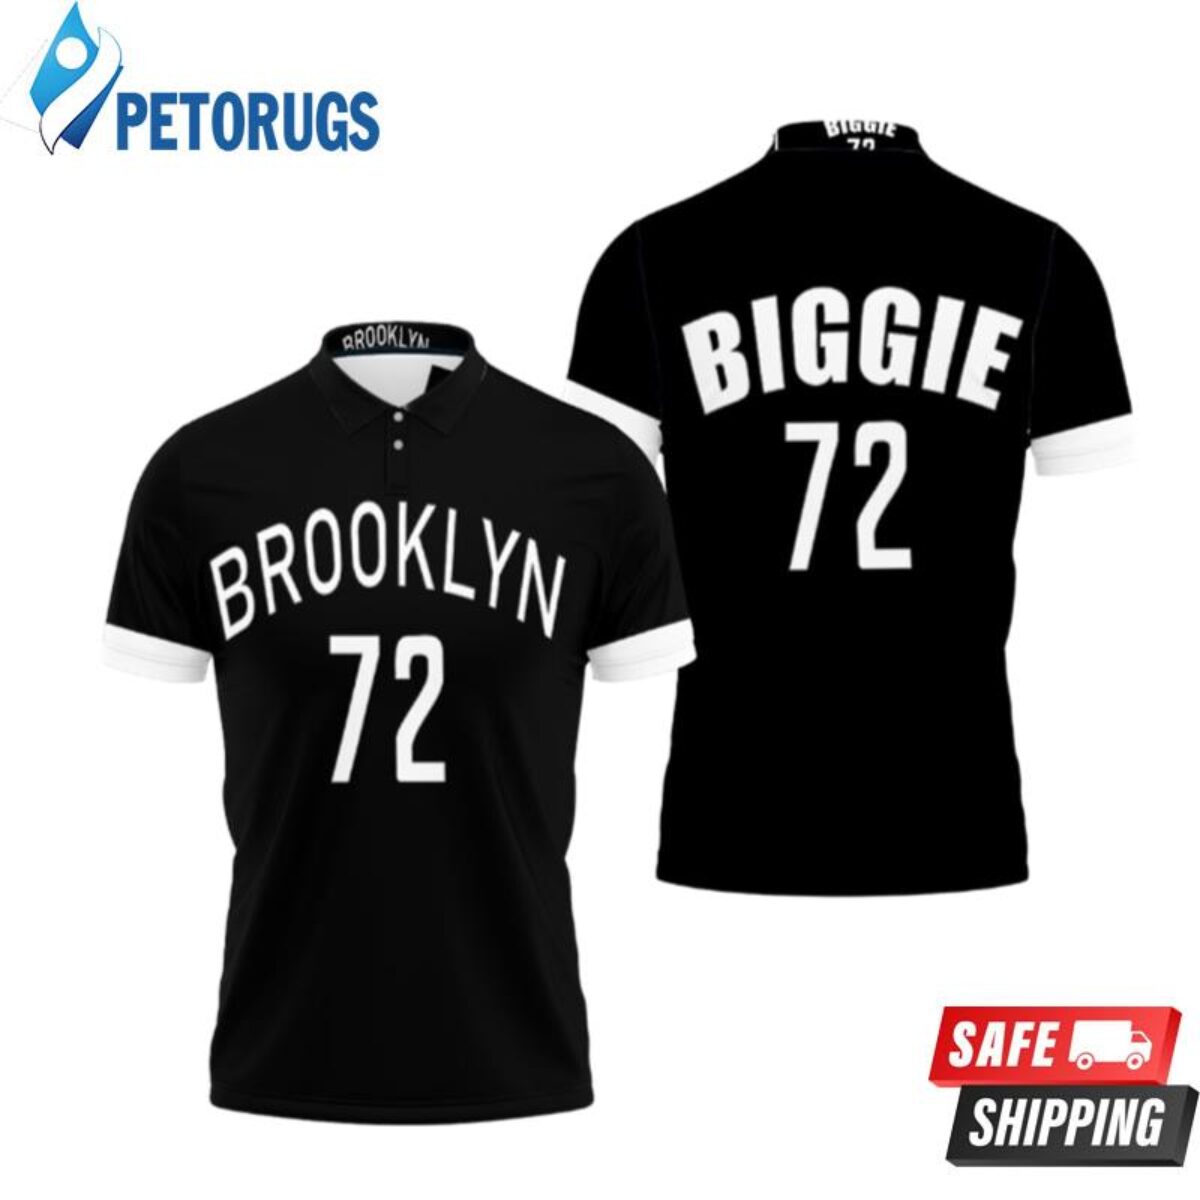 Brooklyn Nets release uniform inspired by Biggie Smalls